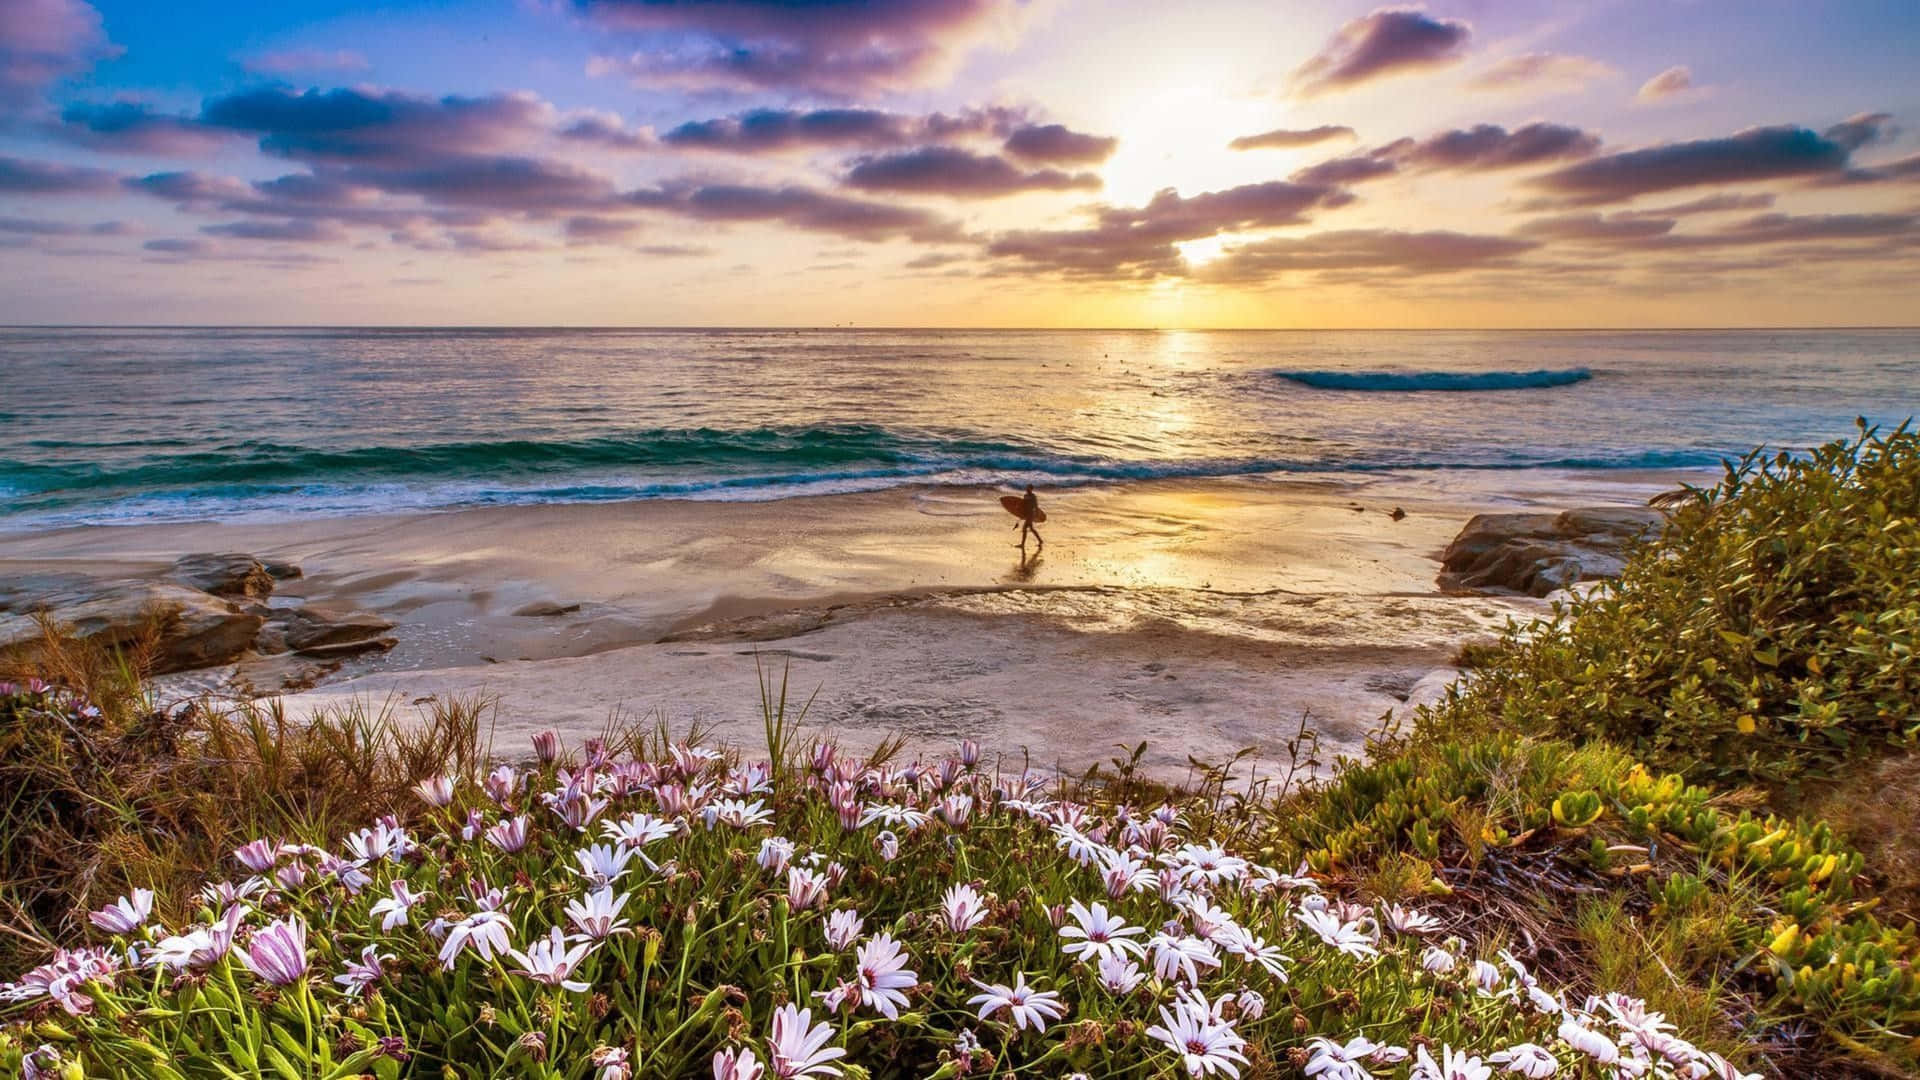 1440p Malibu Surfer Flowers Background